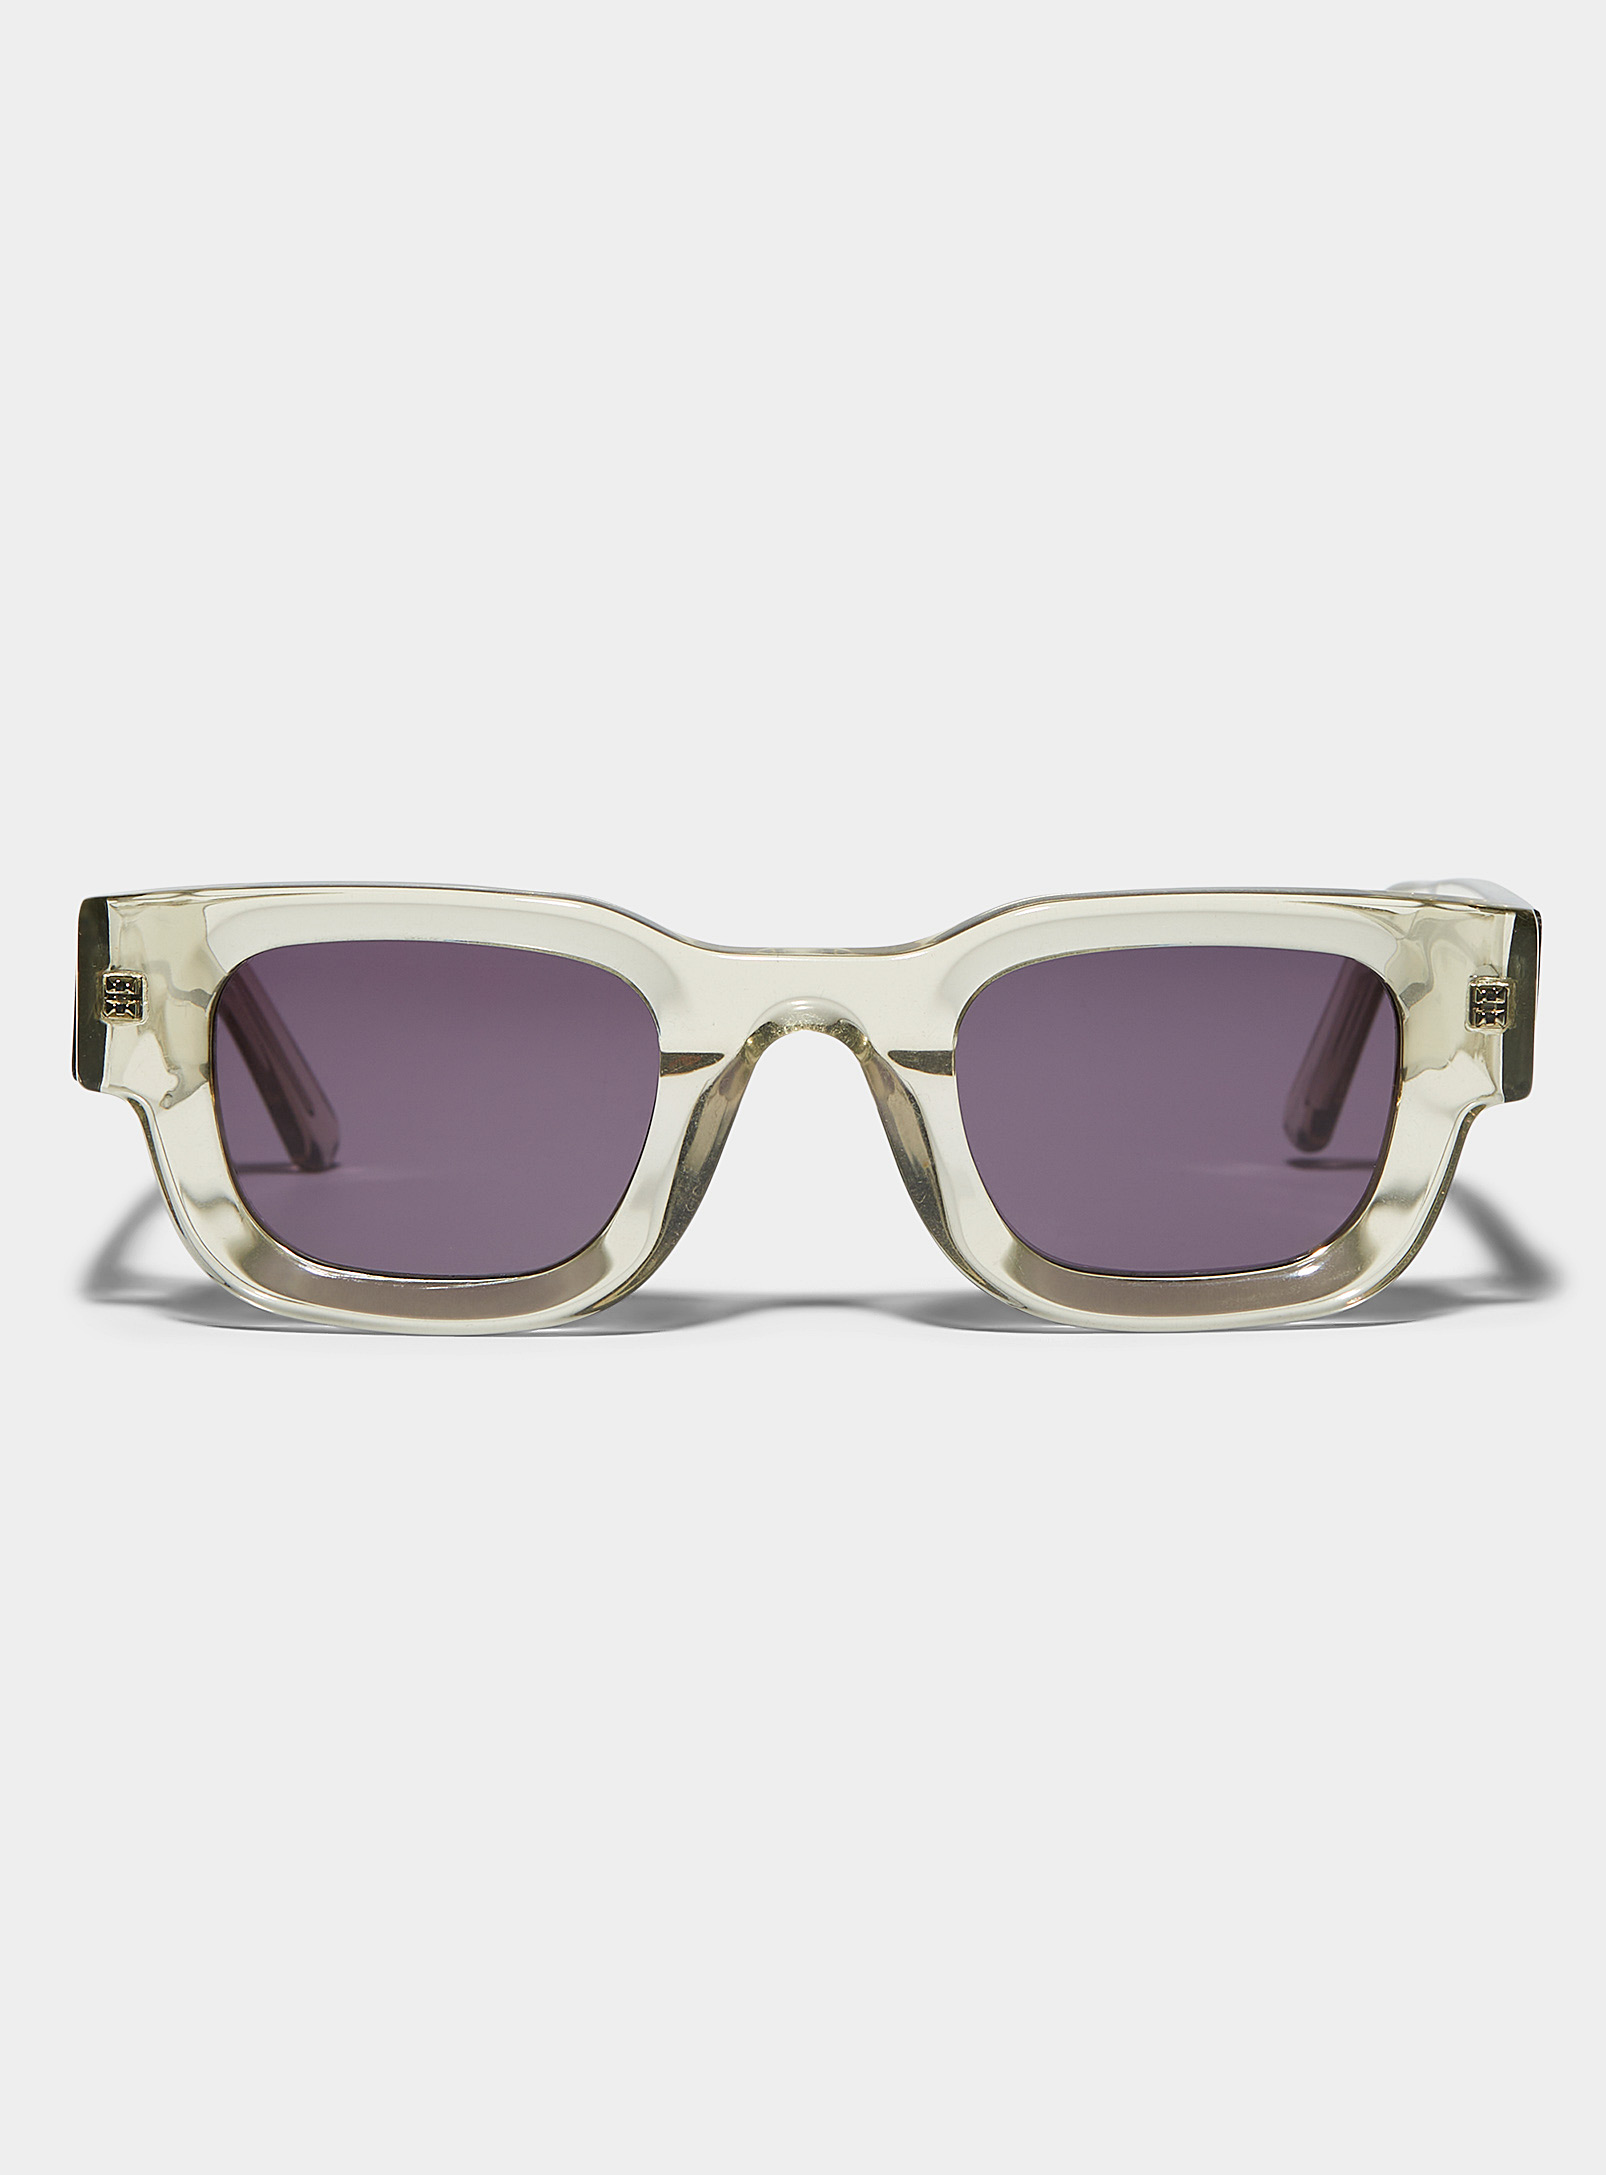 French Kiwis - Men's Valentin rectangular sunglasses